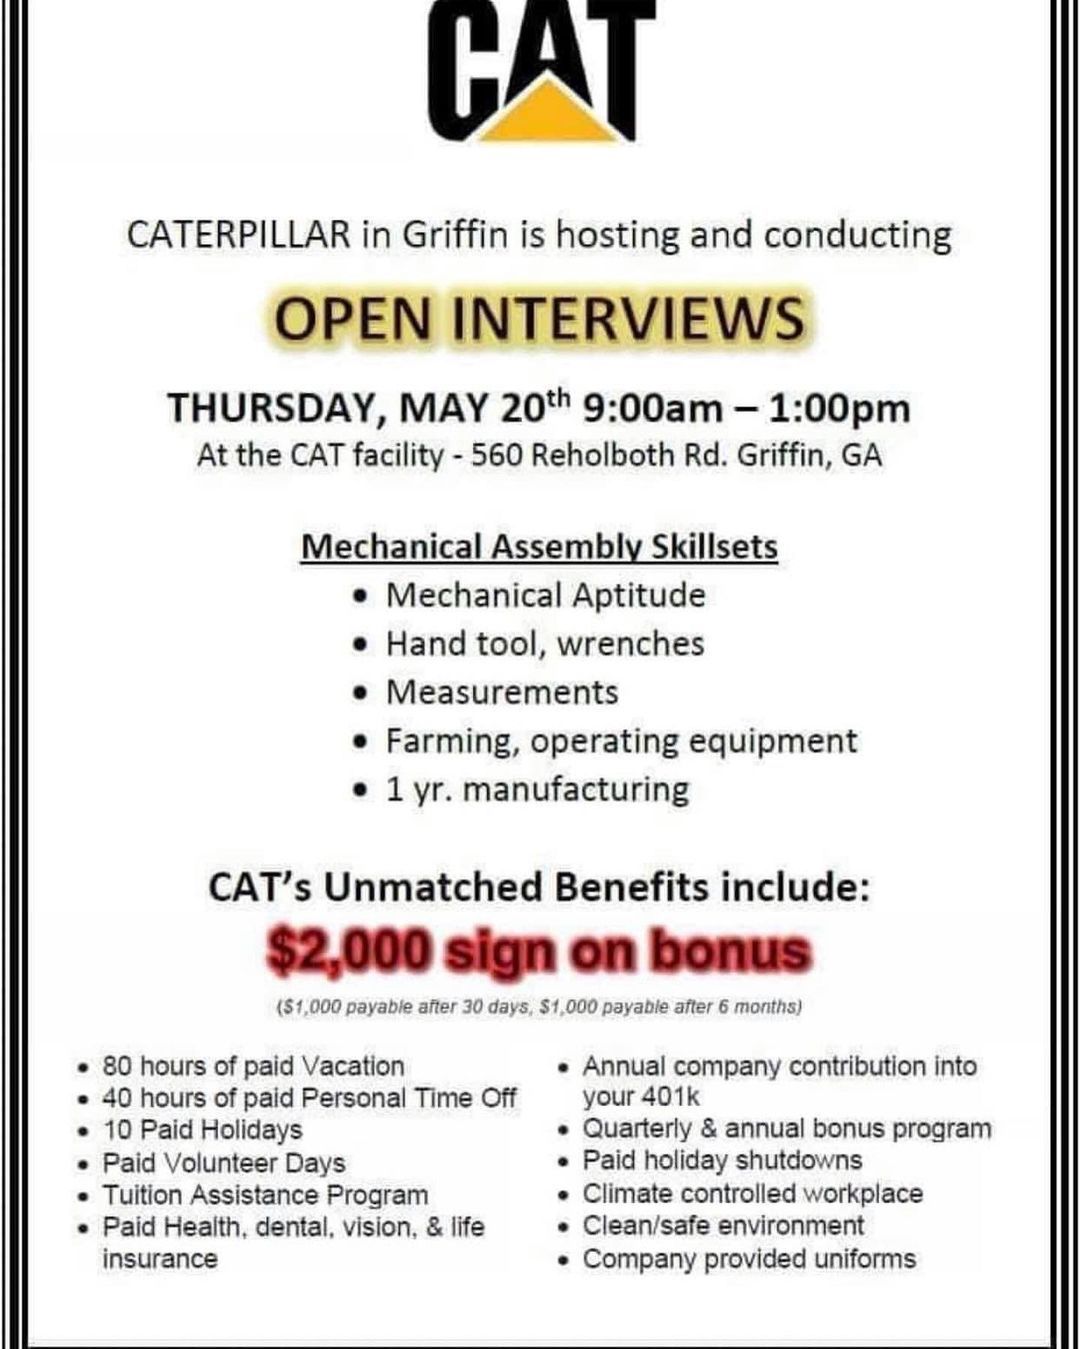 Jobs….Jobs….Jobs with $2000 signing bonus! #jobs #Benefits #atlantajobs #Griffinga #henrycountyga #stockbridgega #mcdonoughga #georgiajobs #Signingbonus #Cat #catapillar (at Georgia) https://www.instagram.com/p/CPFB9gfhoVu/?utm_medium=tumblr